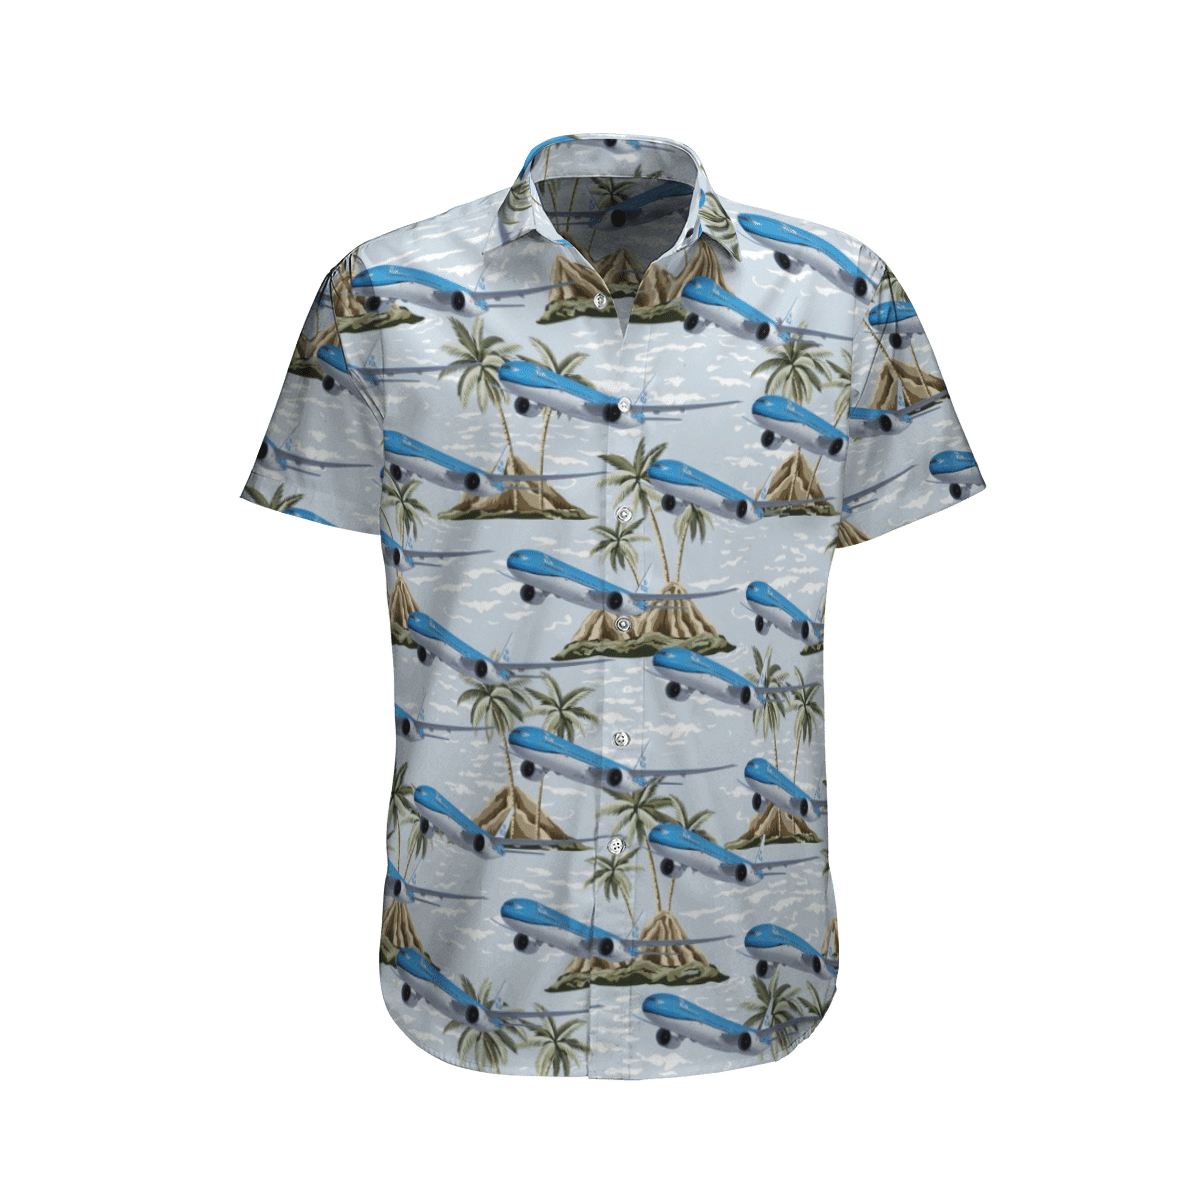 Get a new Hawaiian shirt to enjoy summer vacation 143